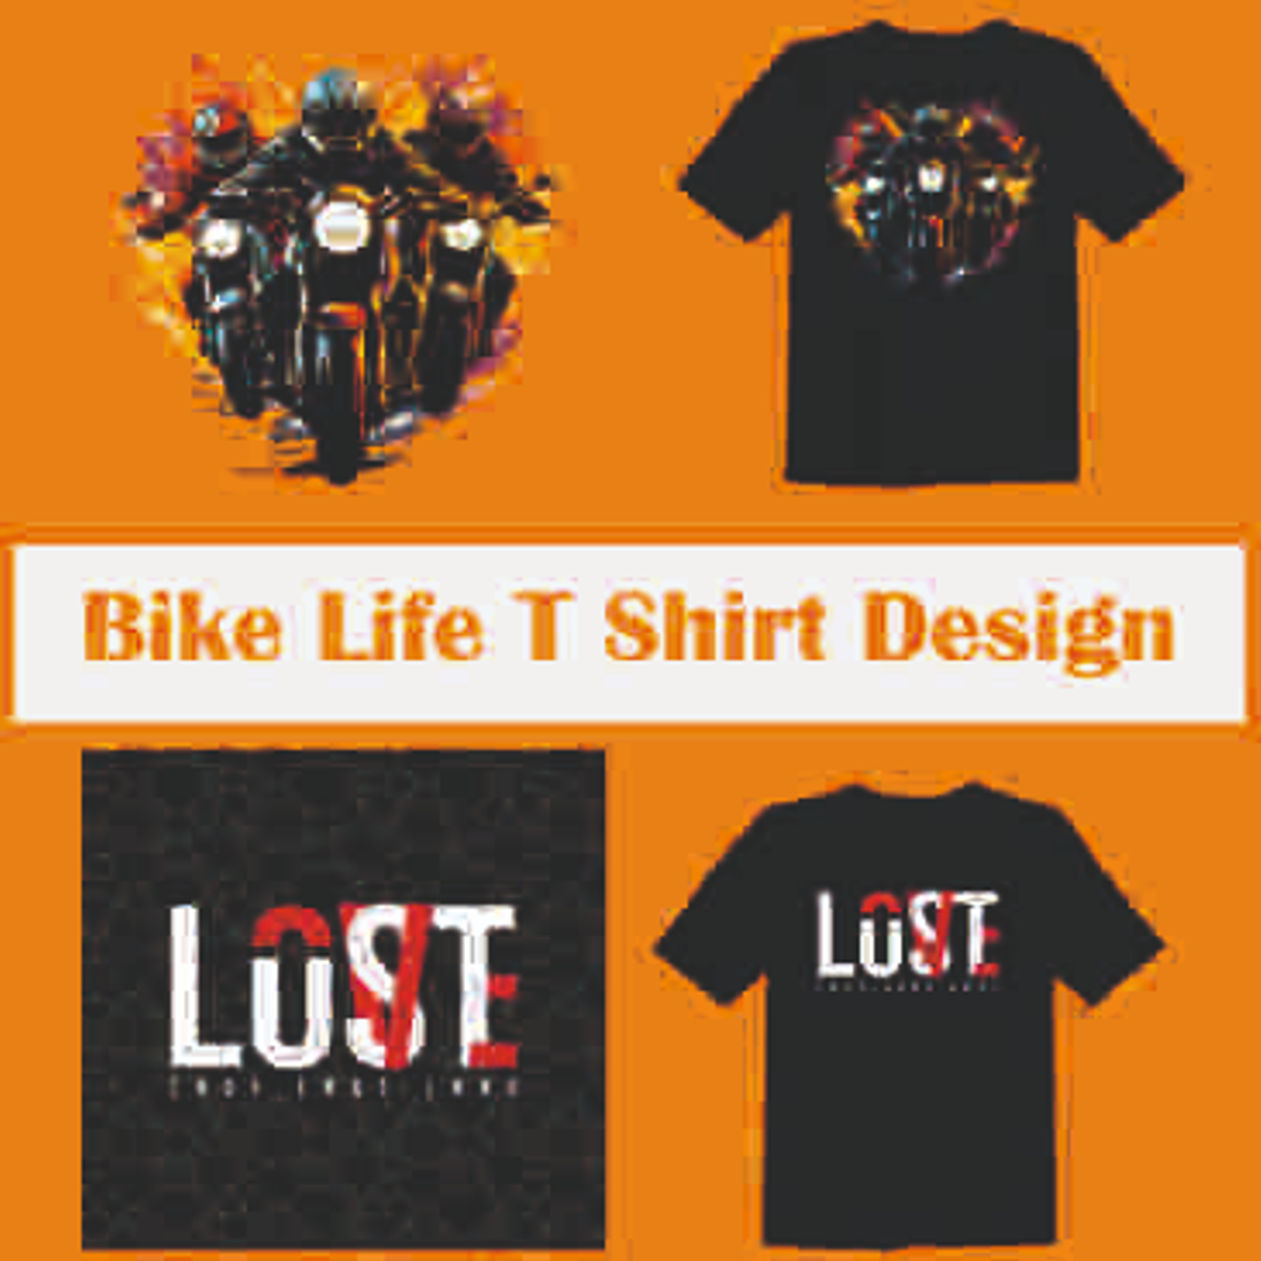 bike life t-shirt design preview image.